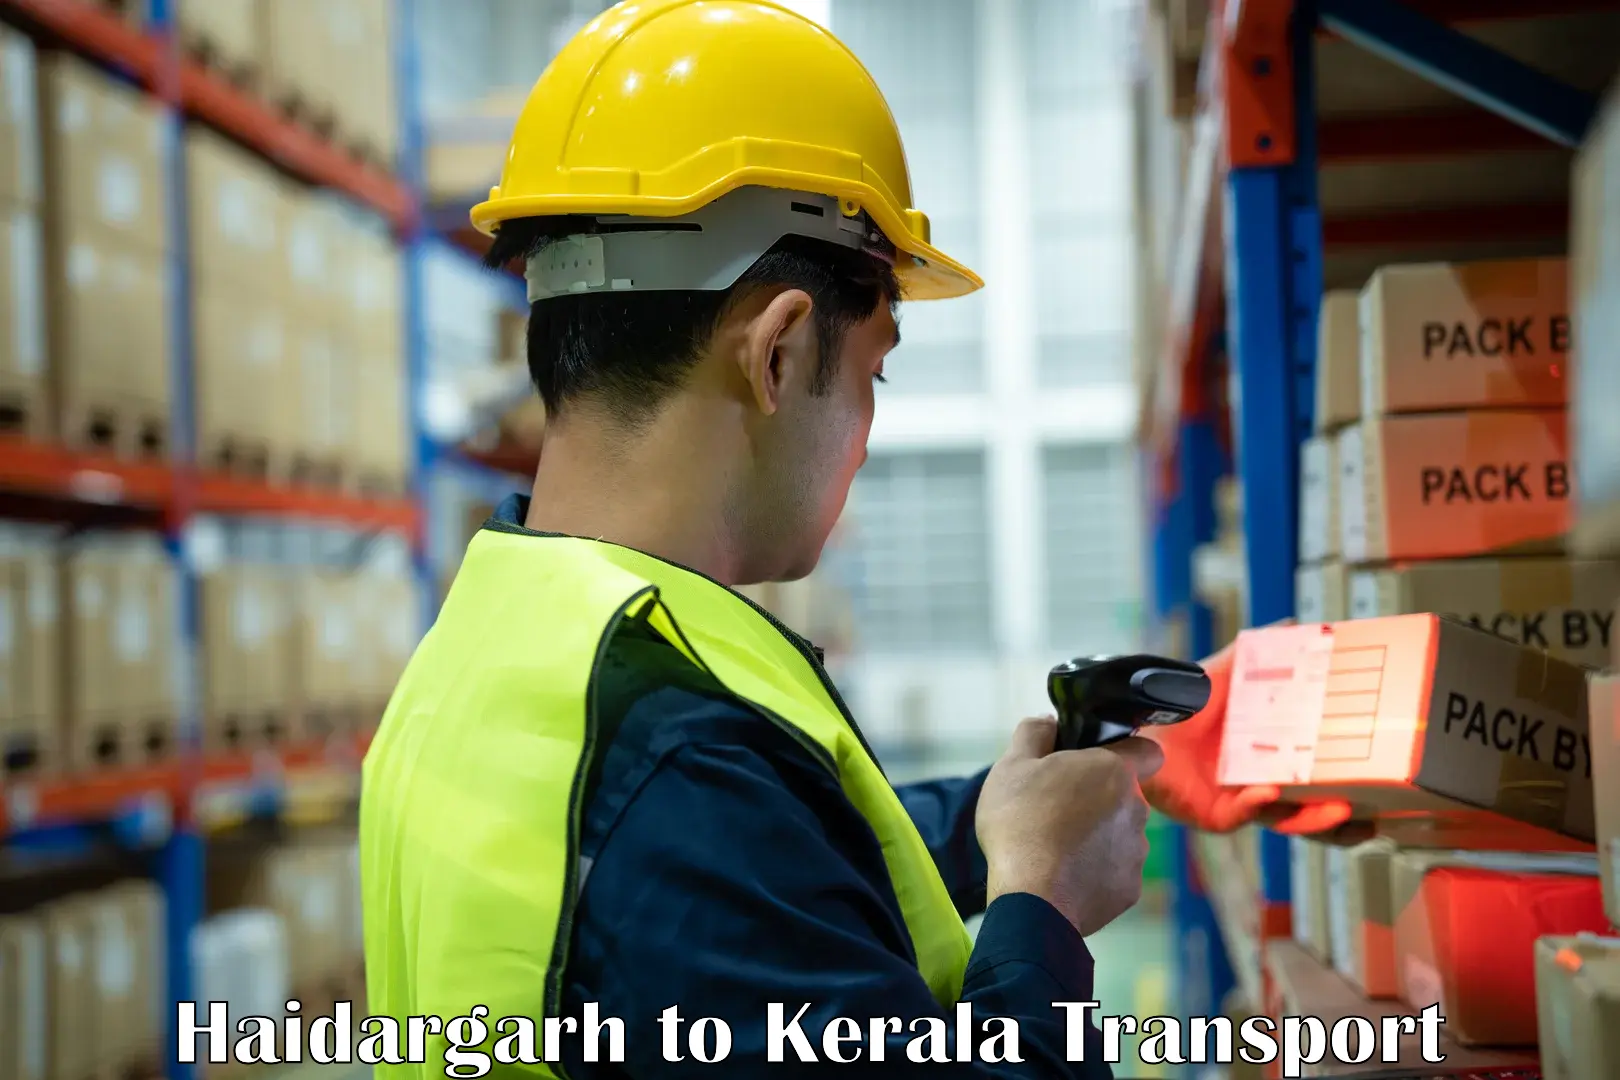 India truck logistics services Haidargarh to Kochi